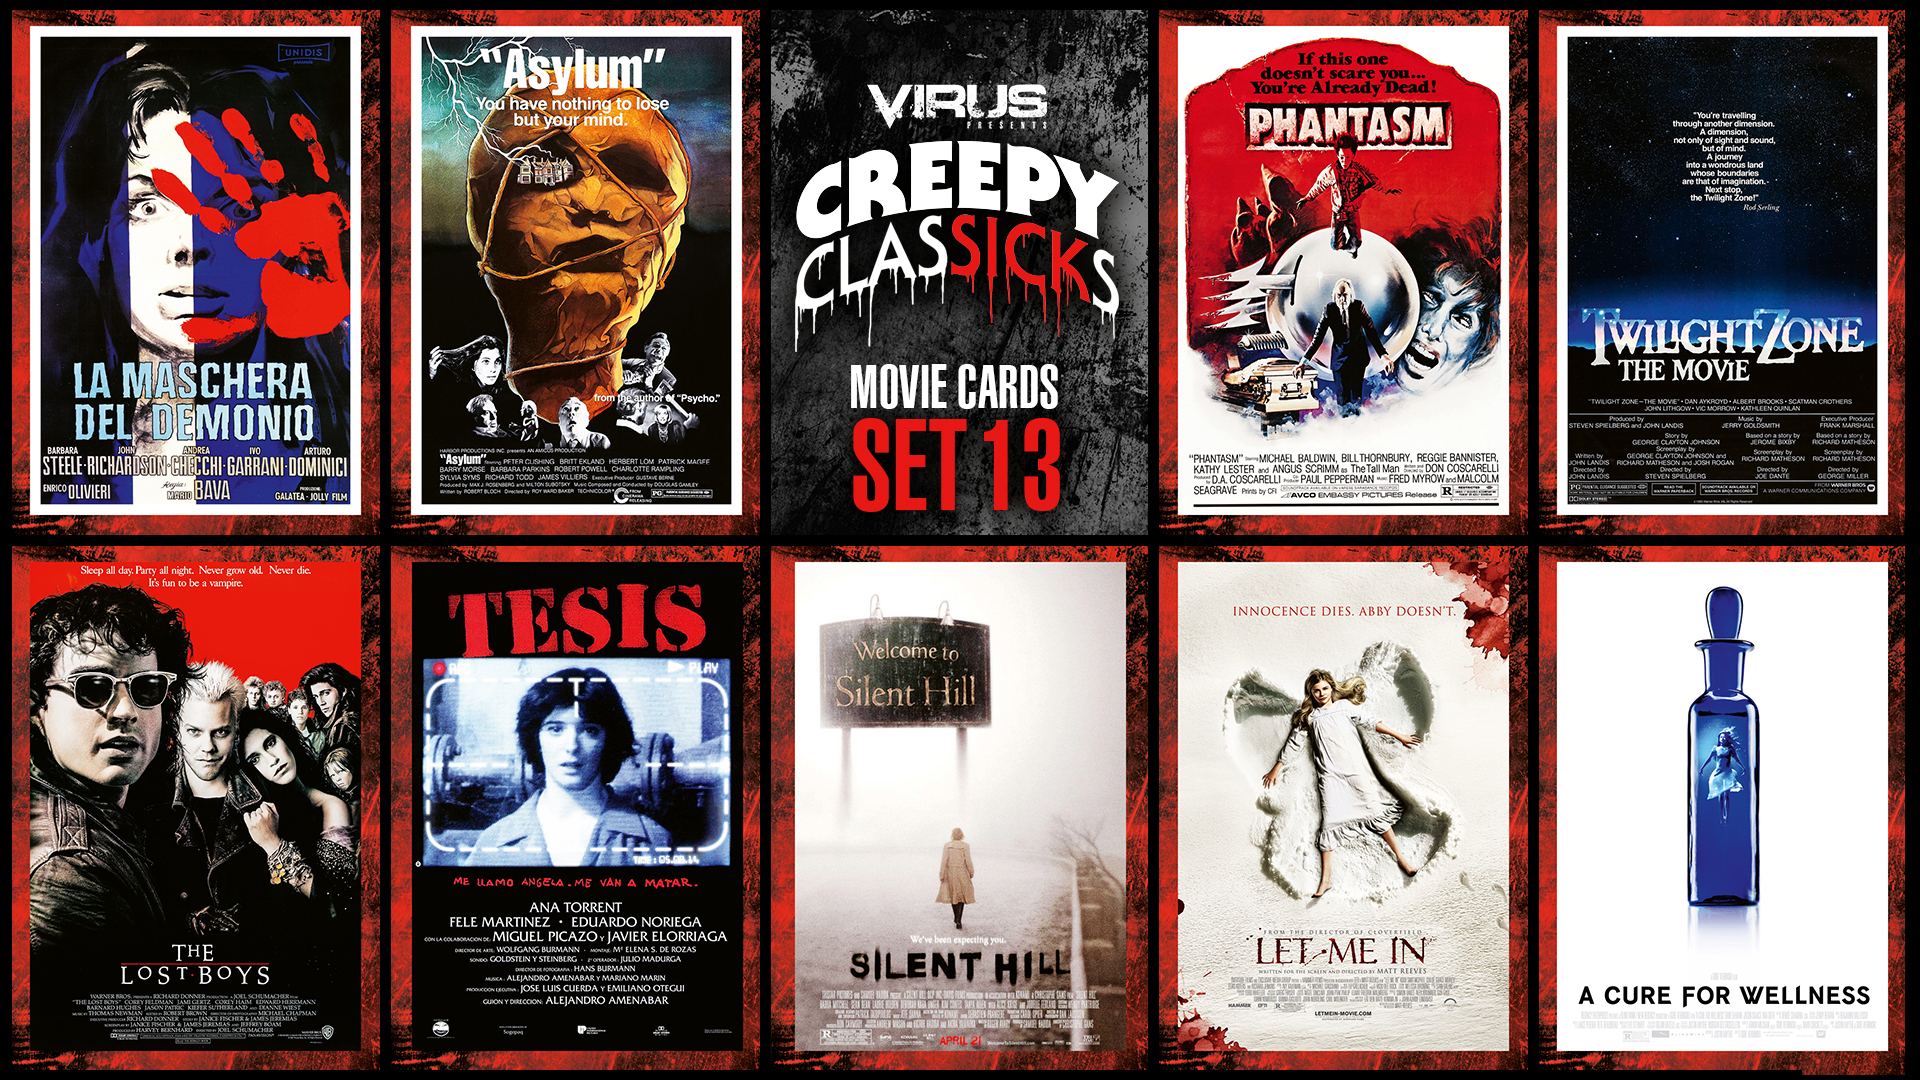 VIRUS Creepy ClasSICKs Movie Cards Set #13